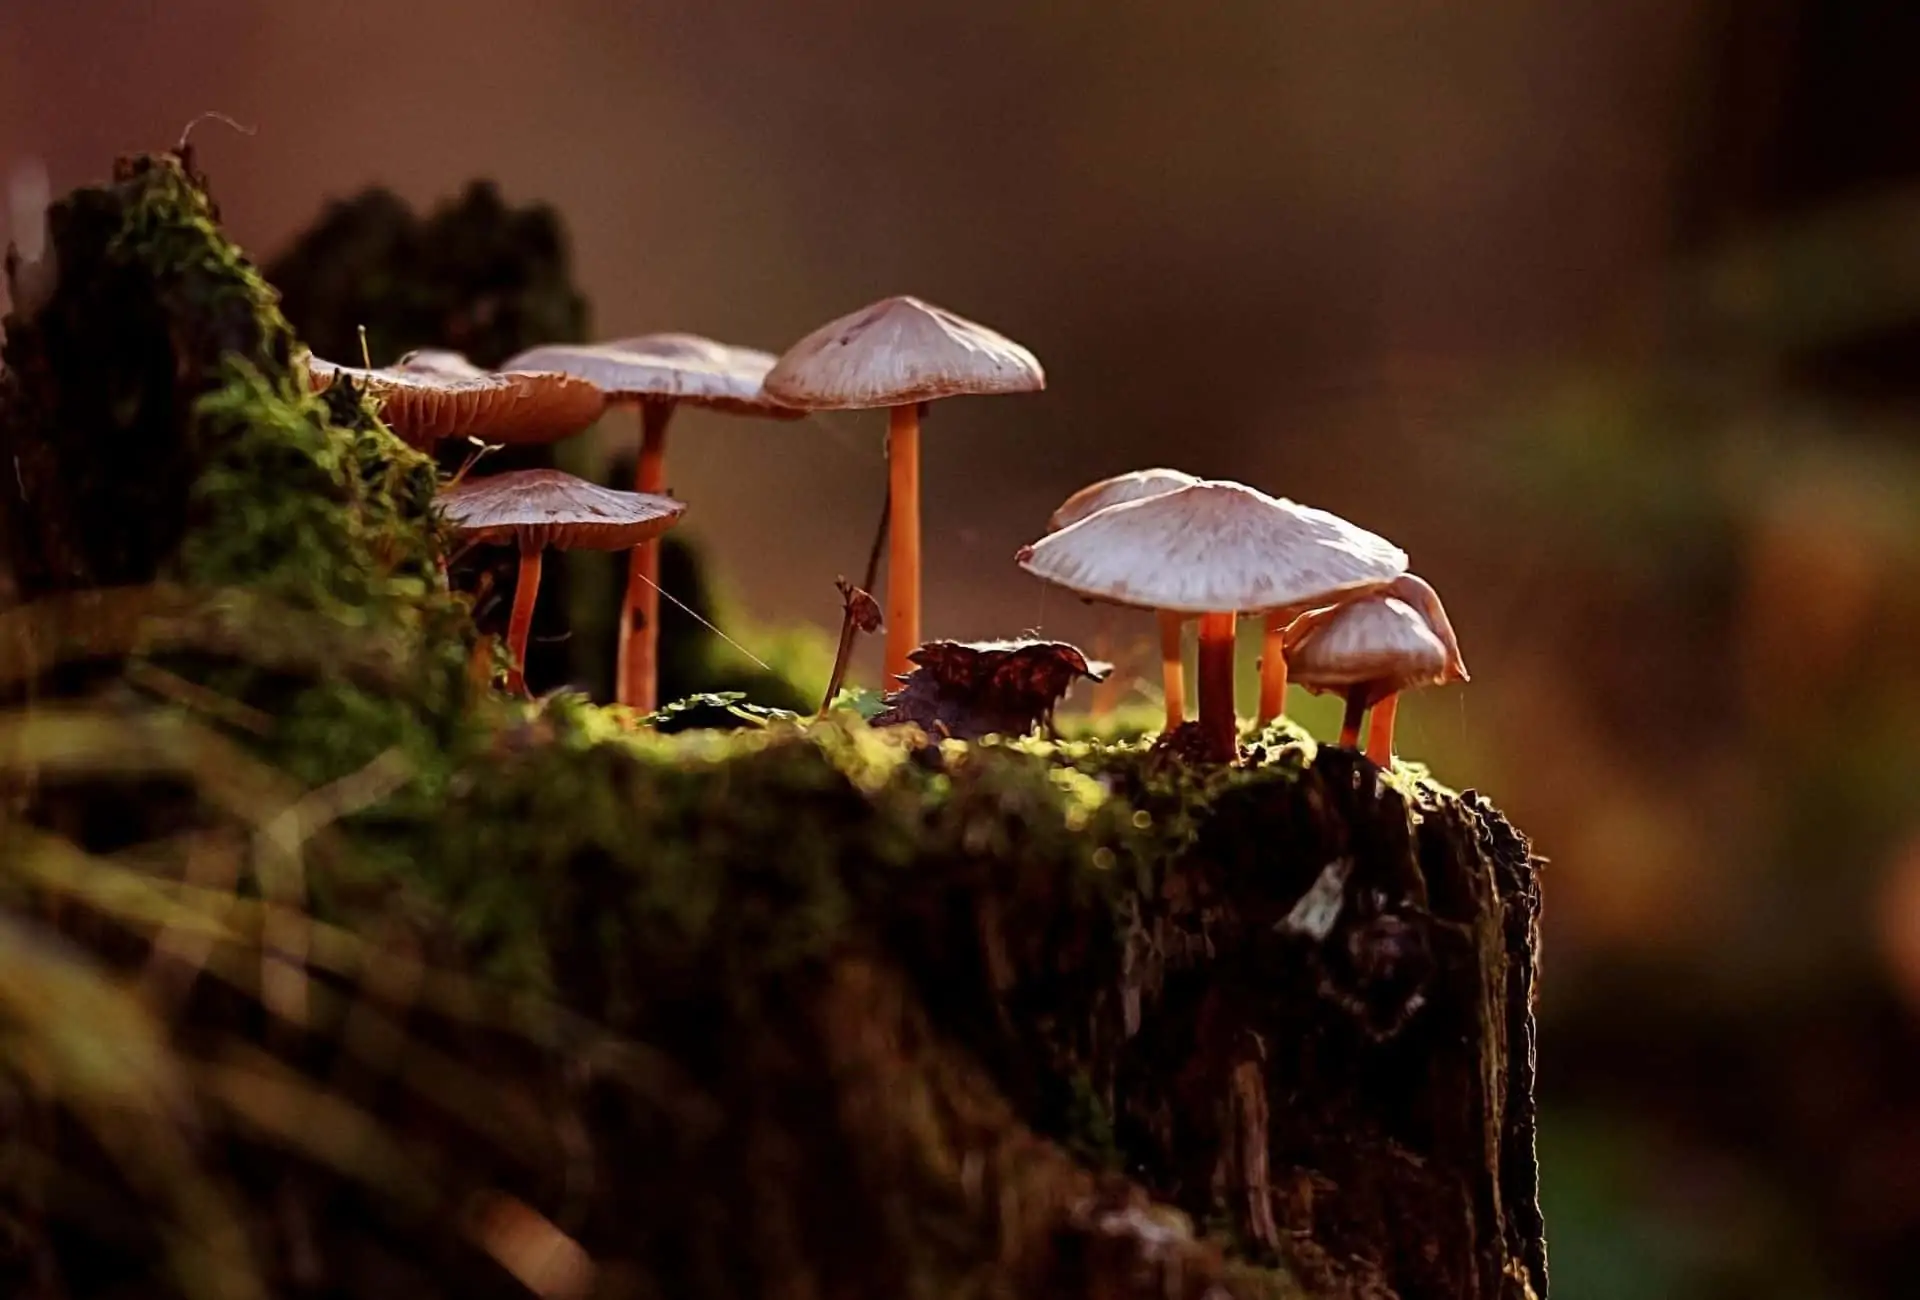 Mushrooms in a dark forest.